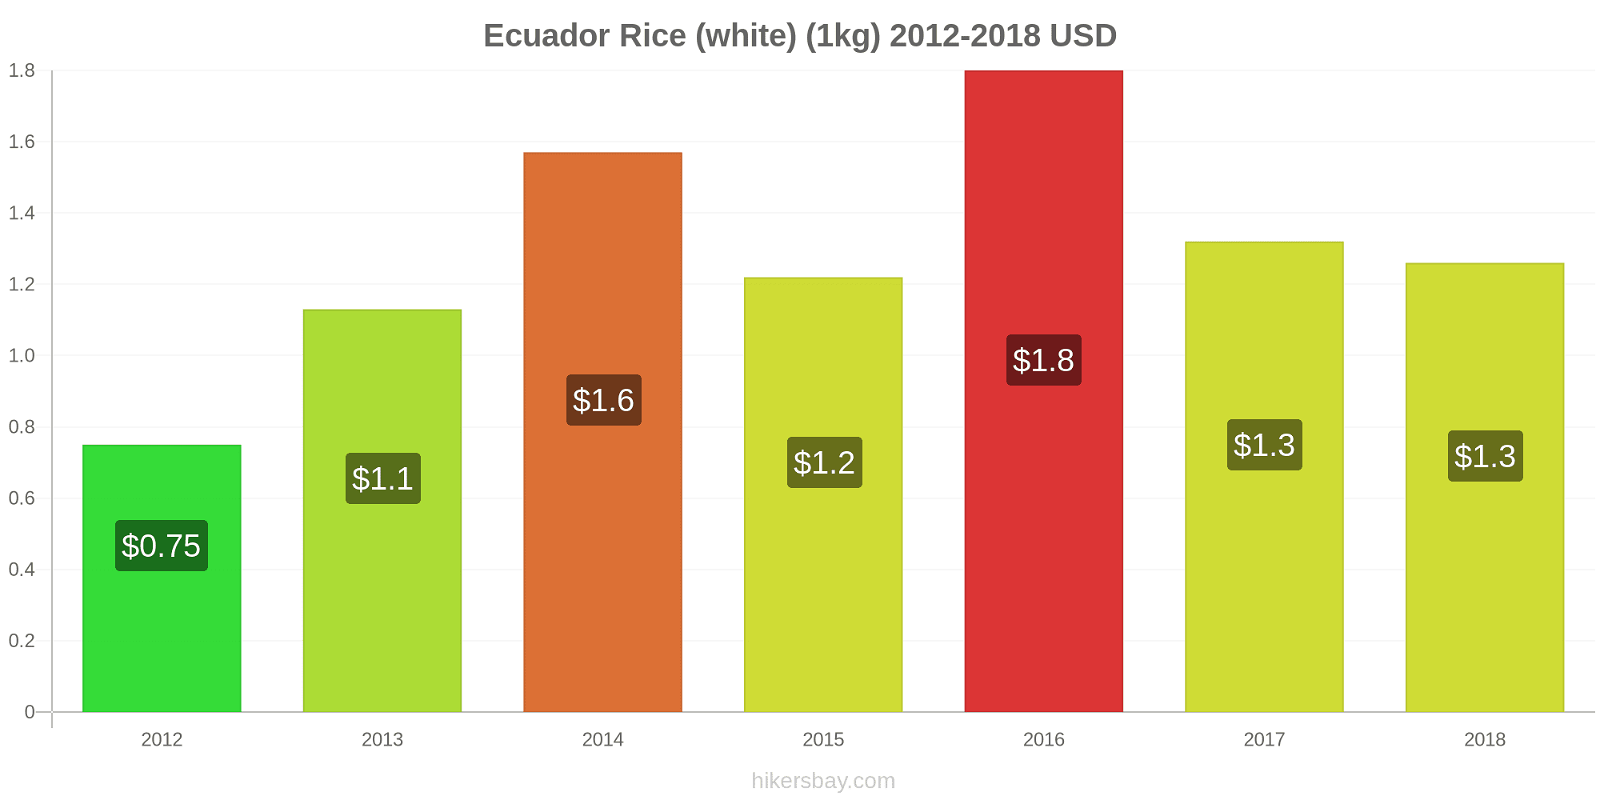 Ecuador price changes Kilo of white rice hikersbay.com